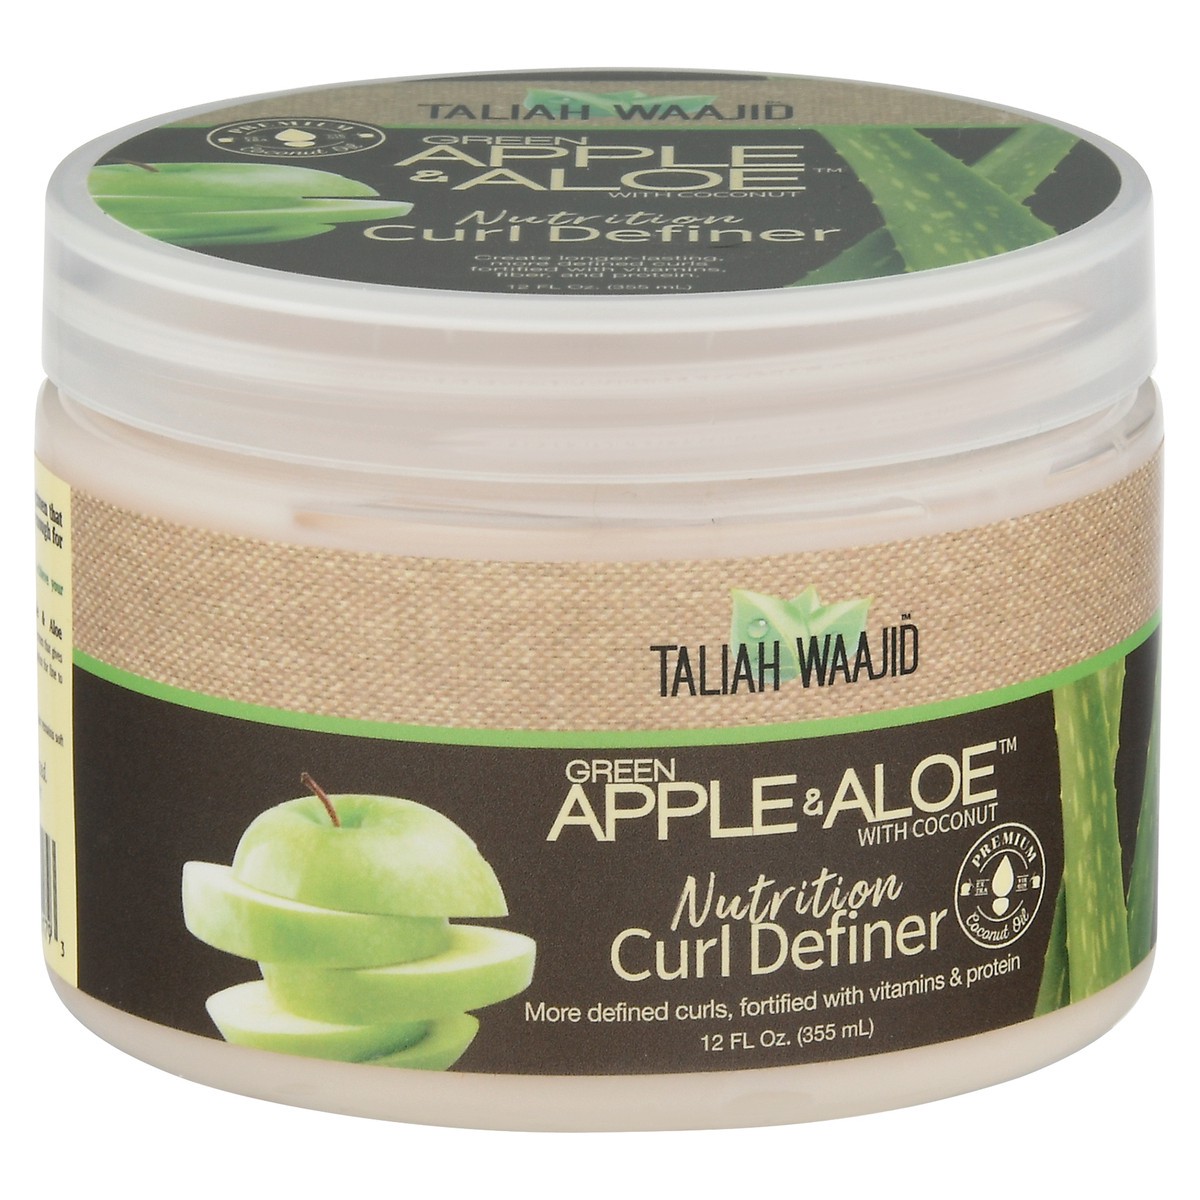 slide 5 of 9, Taliah Waajid Nutrition Green Apple & Aloe with Coconut Curl Definer 12 fl oz, 12 fl oz